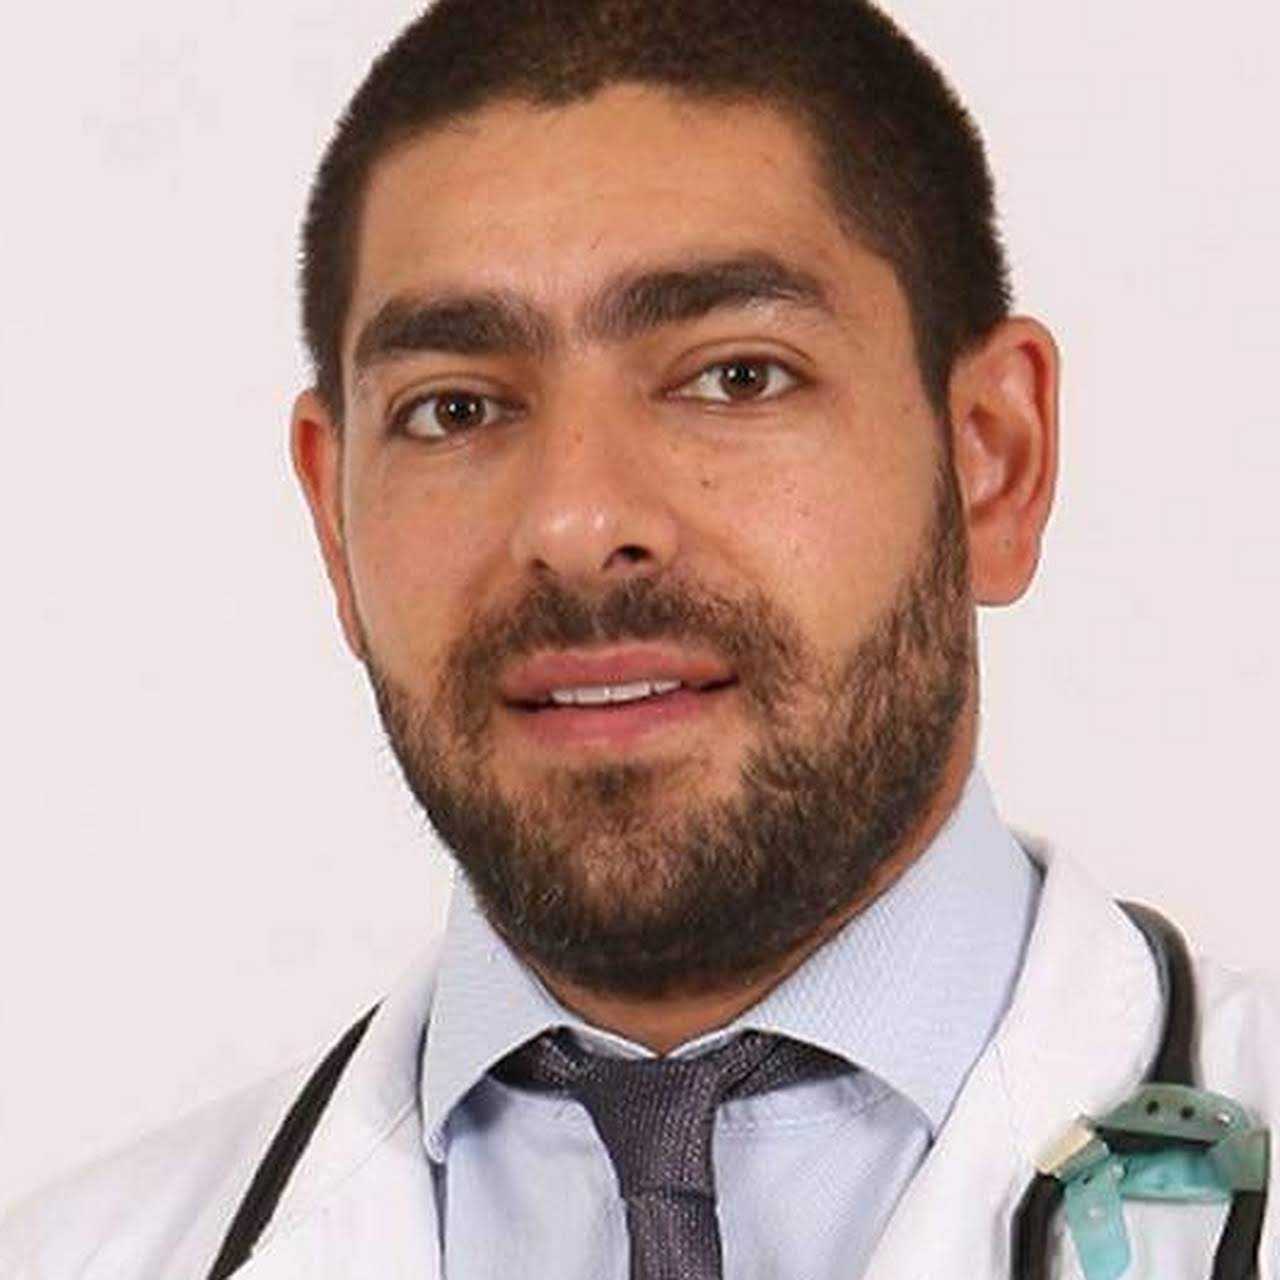 Dr. Ghassan Antoun